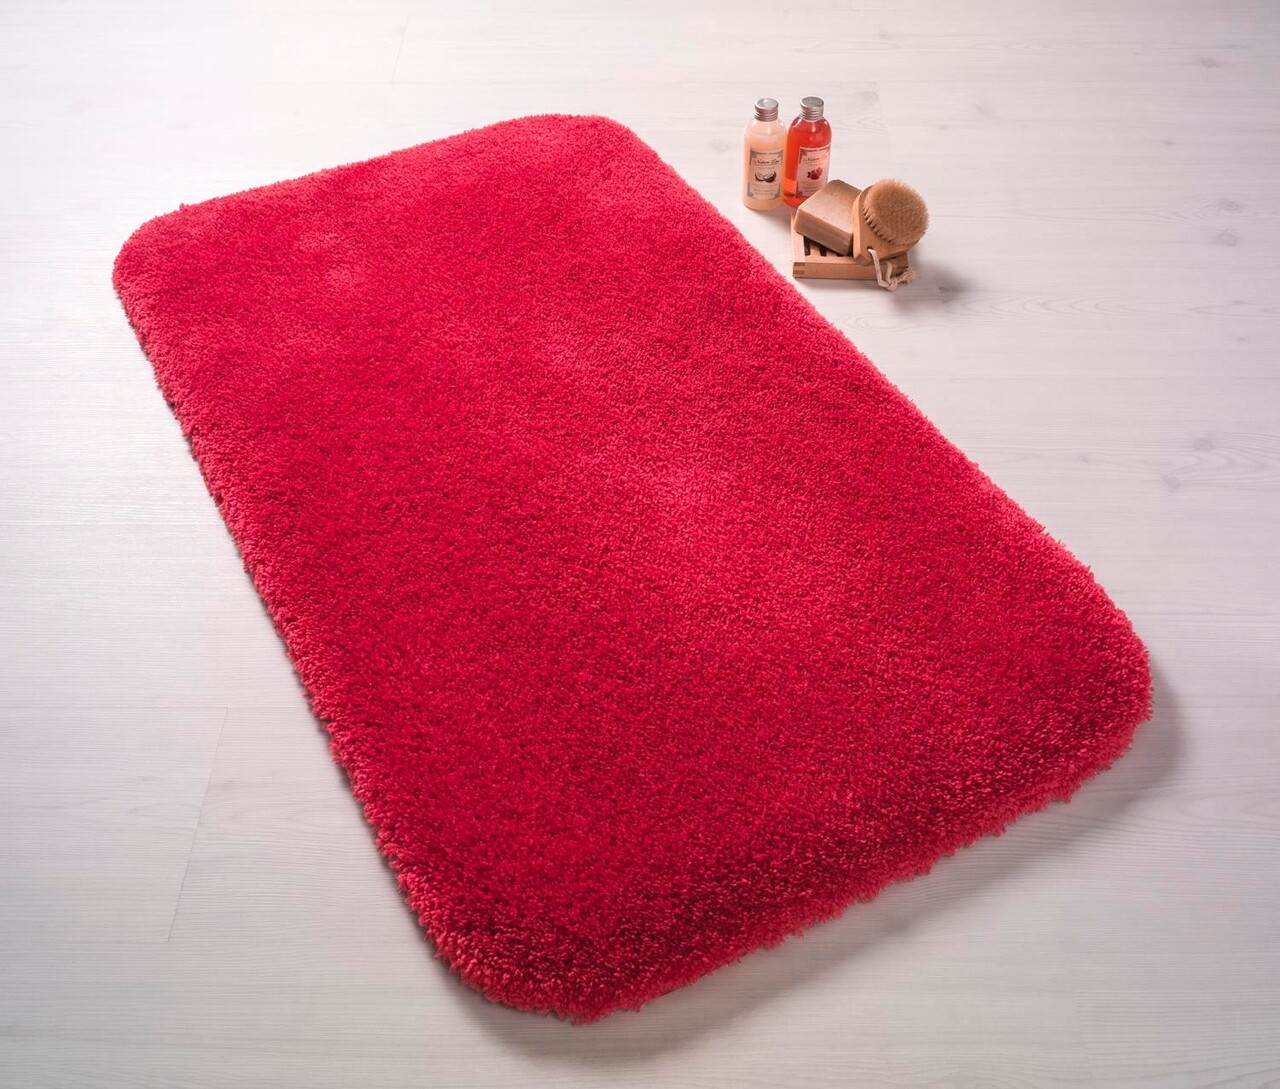 Miami fürdőszobai szőnyeg, confetti, 100x160 cm, piros